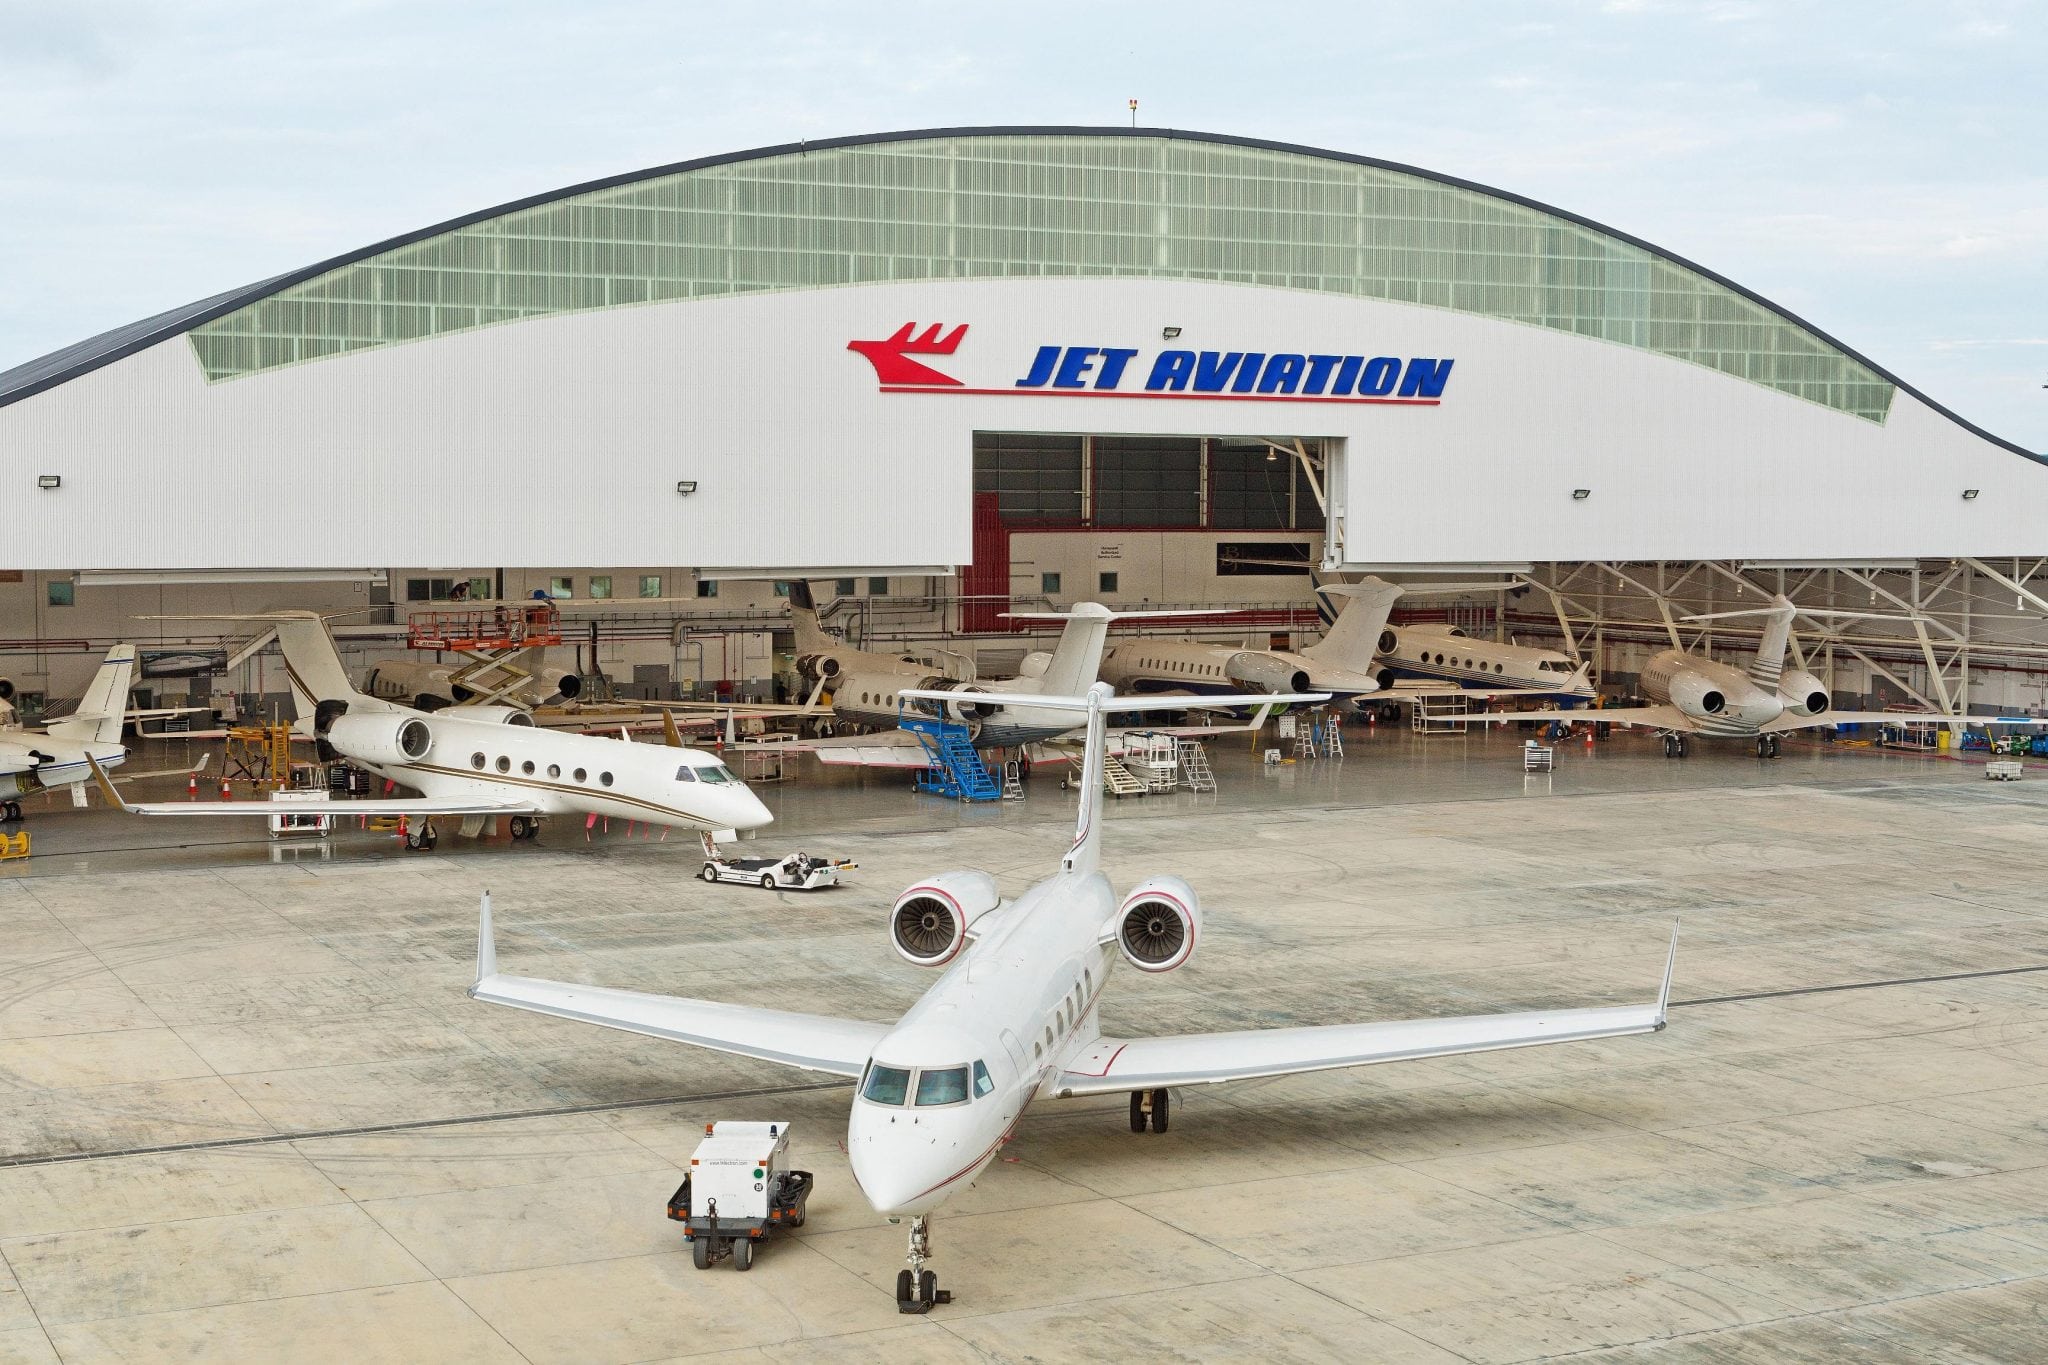 Jet Aviation aircraft hangar